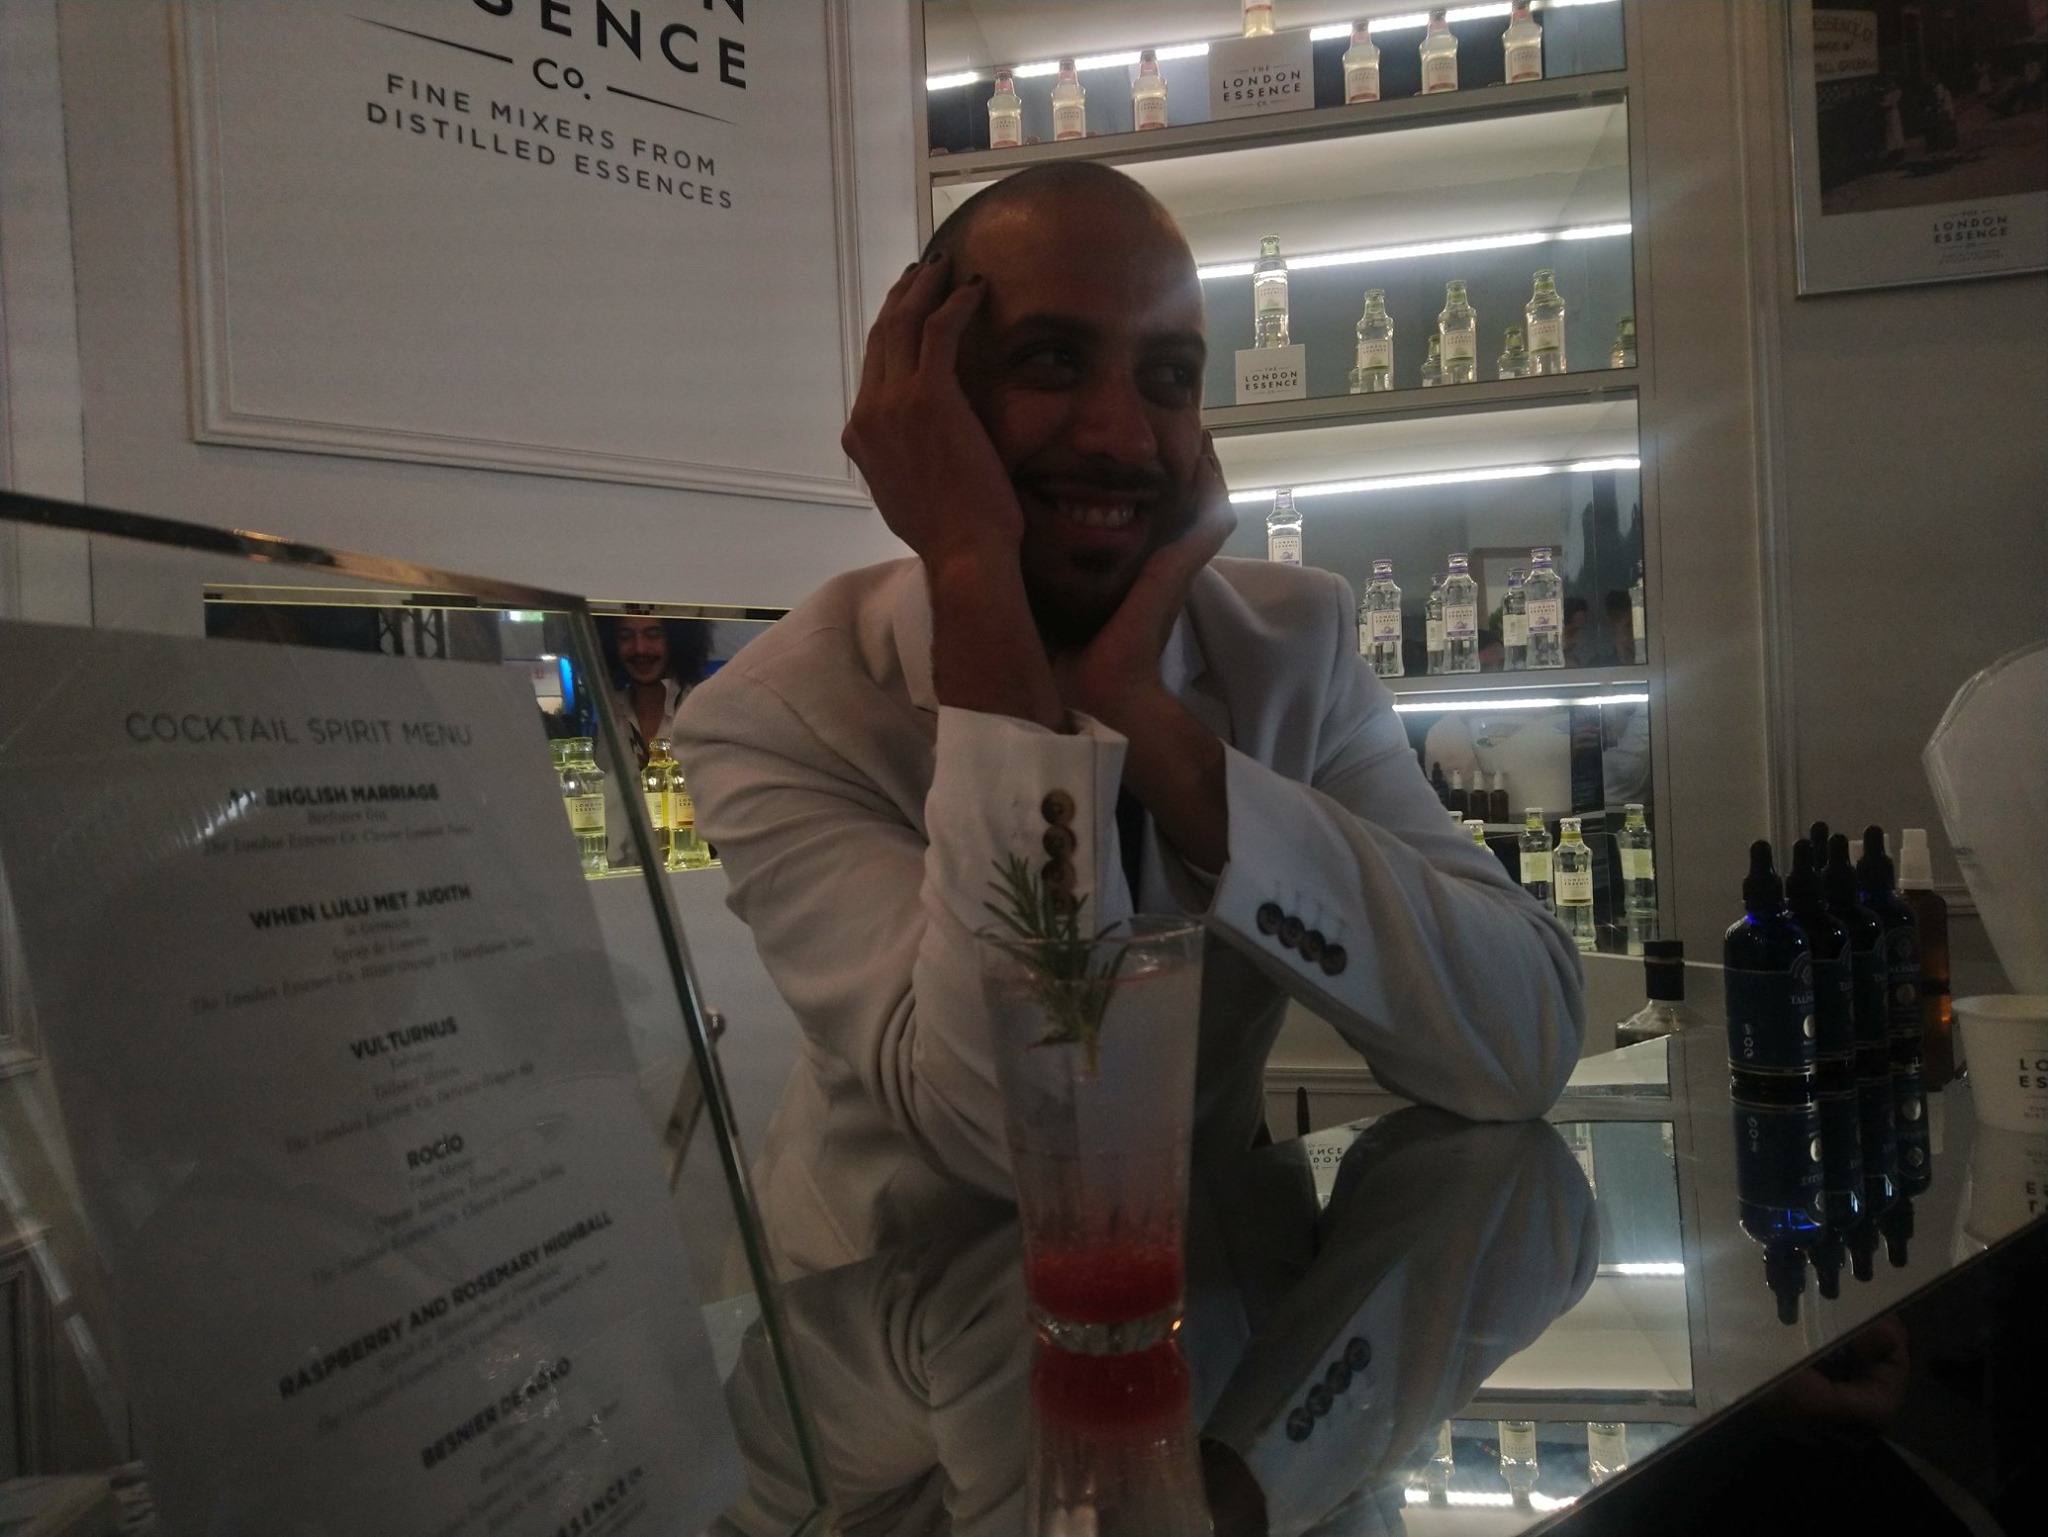 The London Essence - Cocktails Spirits 2019